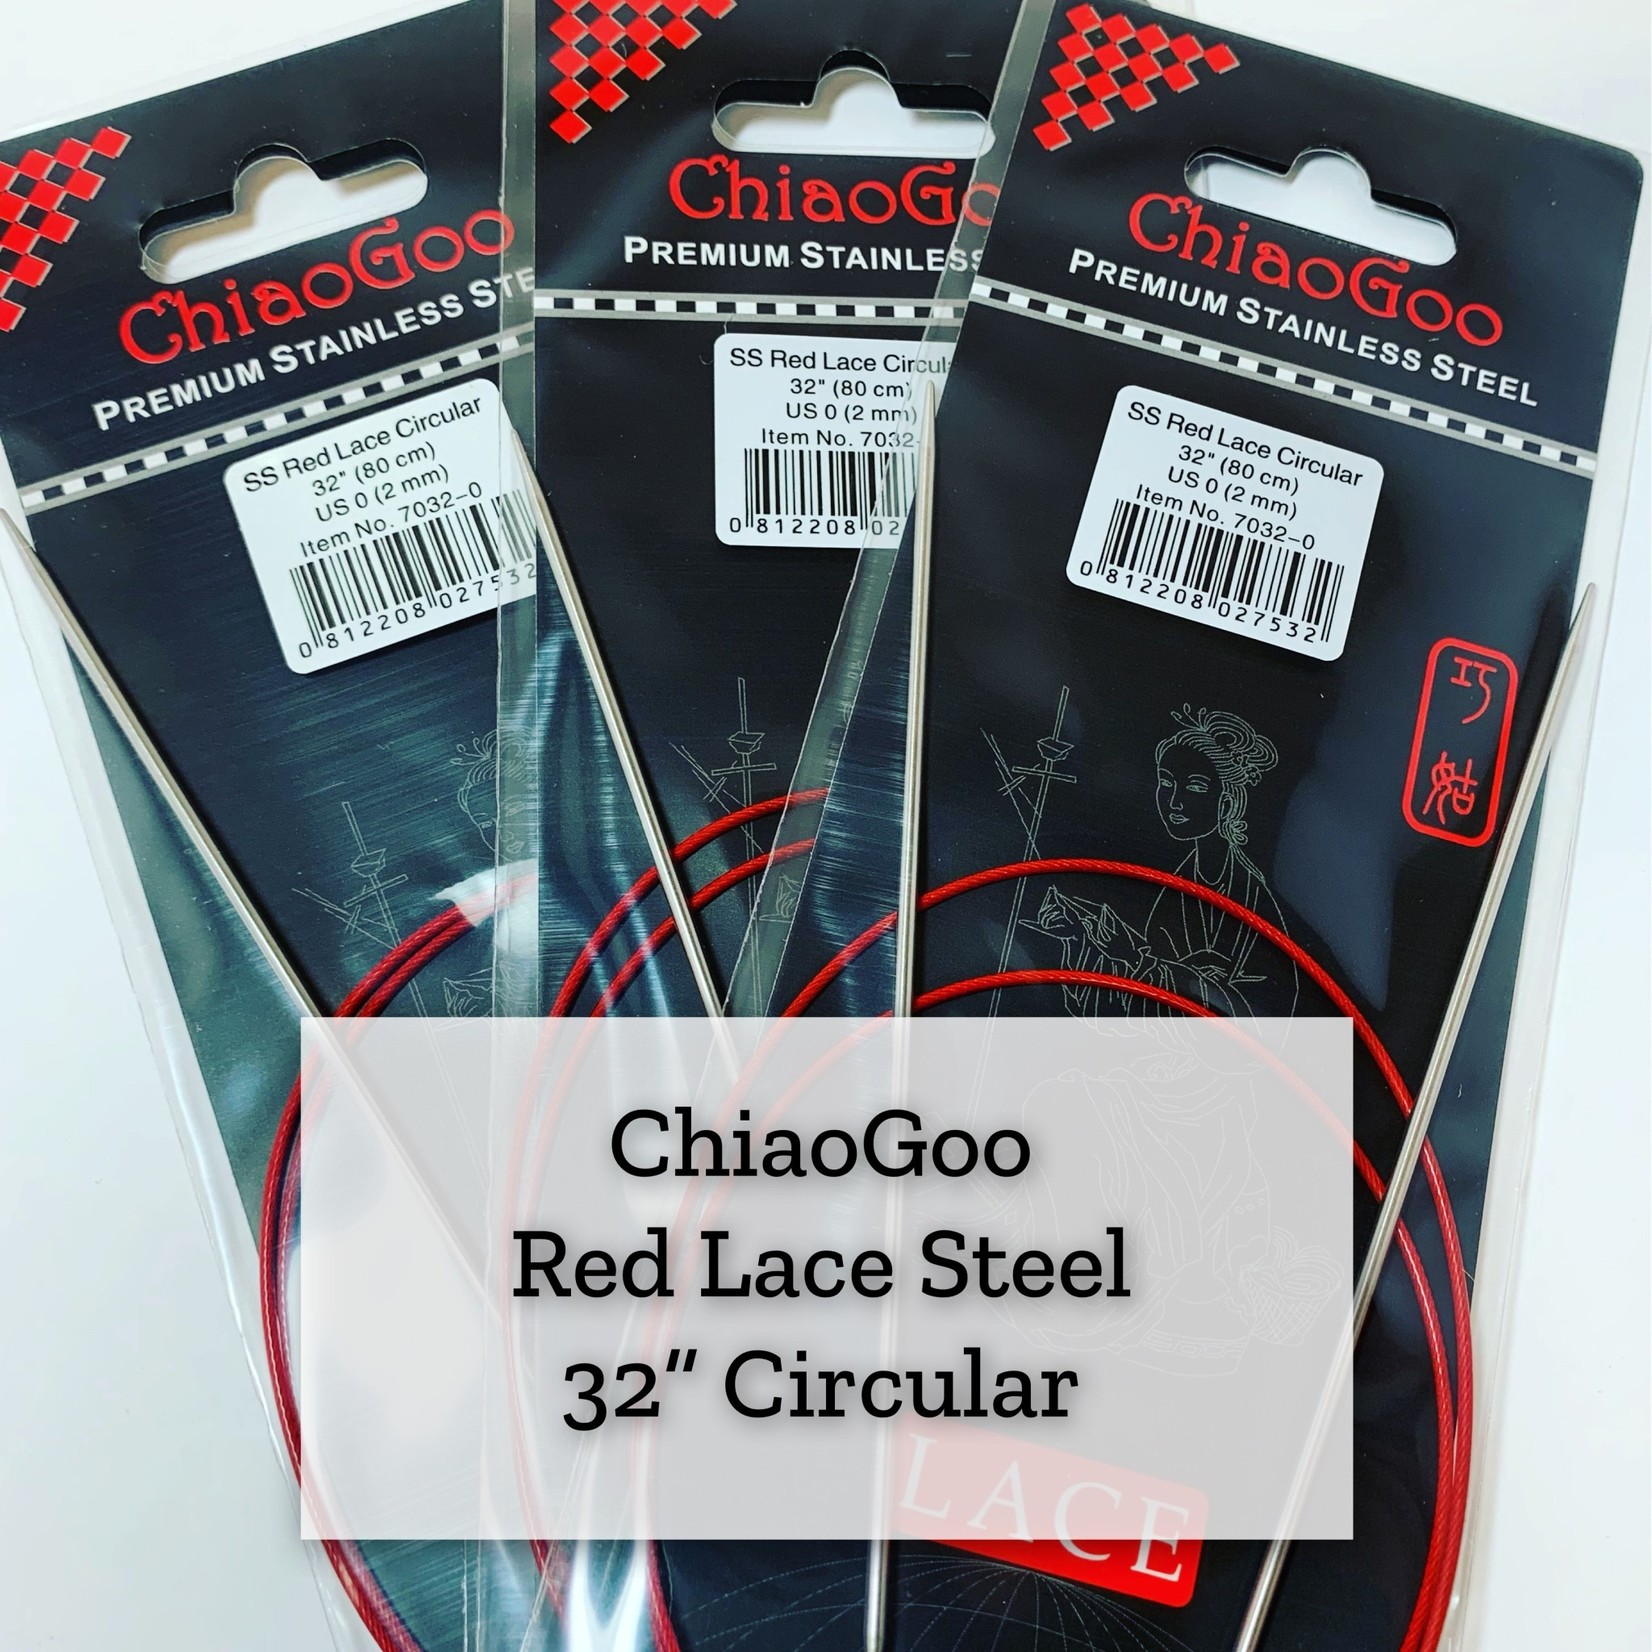 ChiaoGoo Red Lace Steel - 32" 3 mm